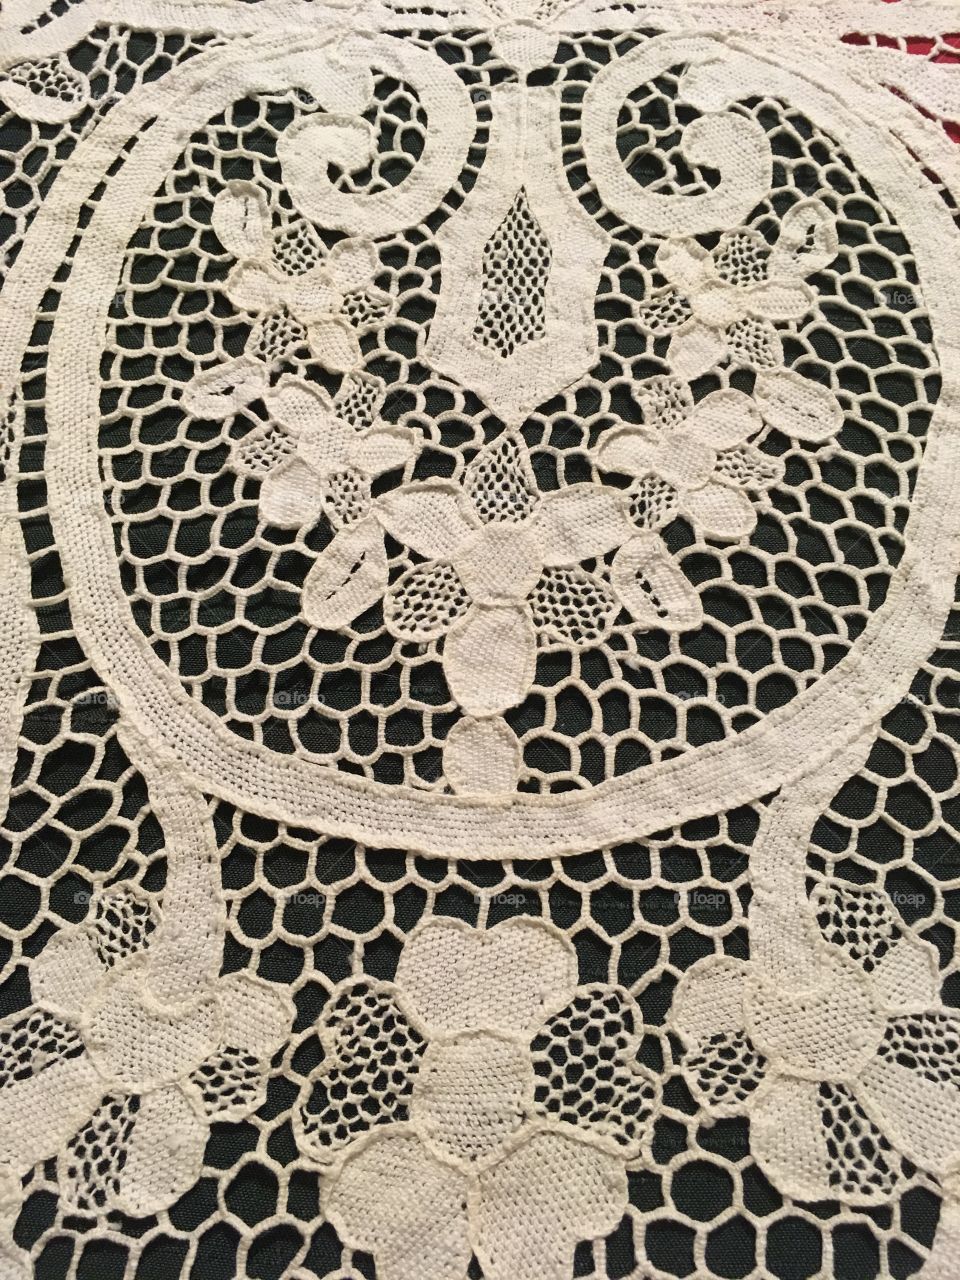 Antique handmade lace